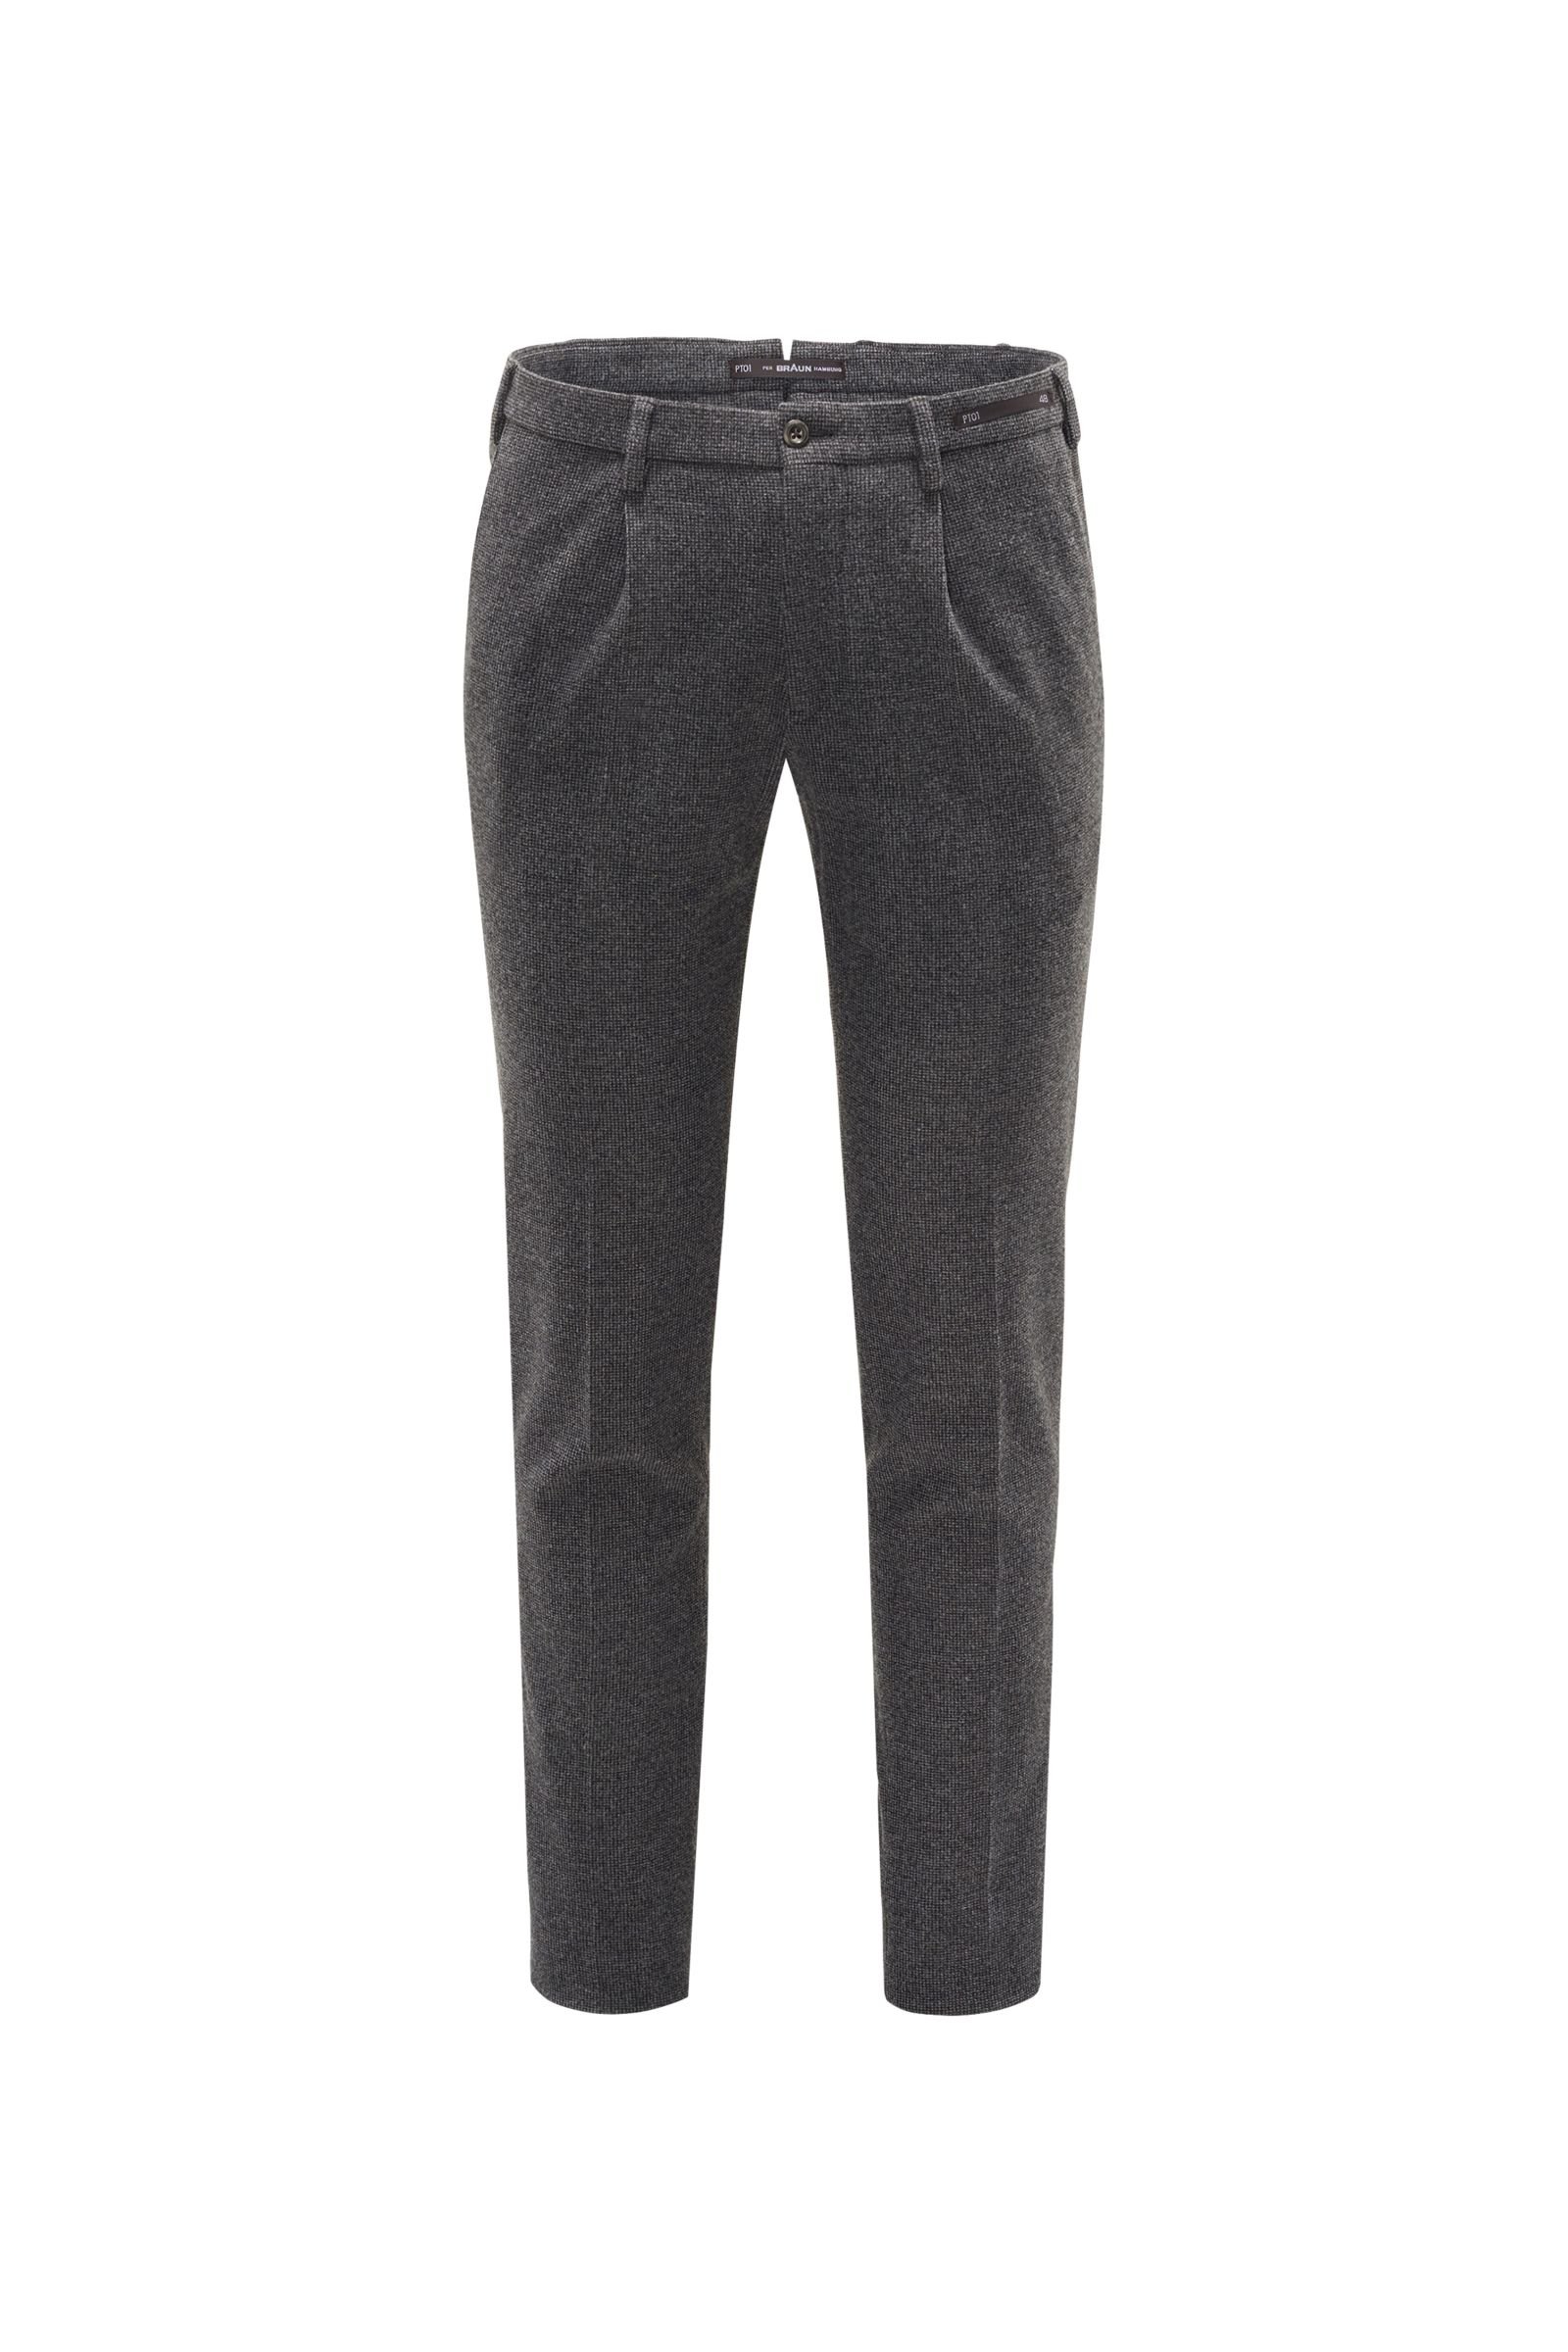 Flannel trousers 'Preppy Fit' dark grey patterned